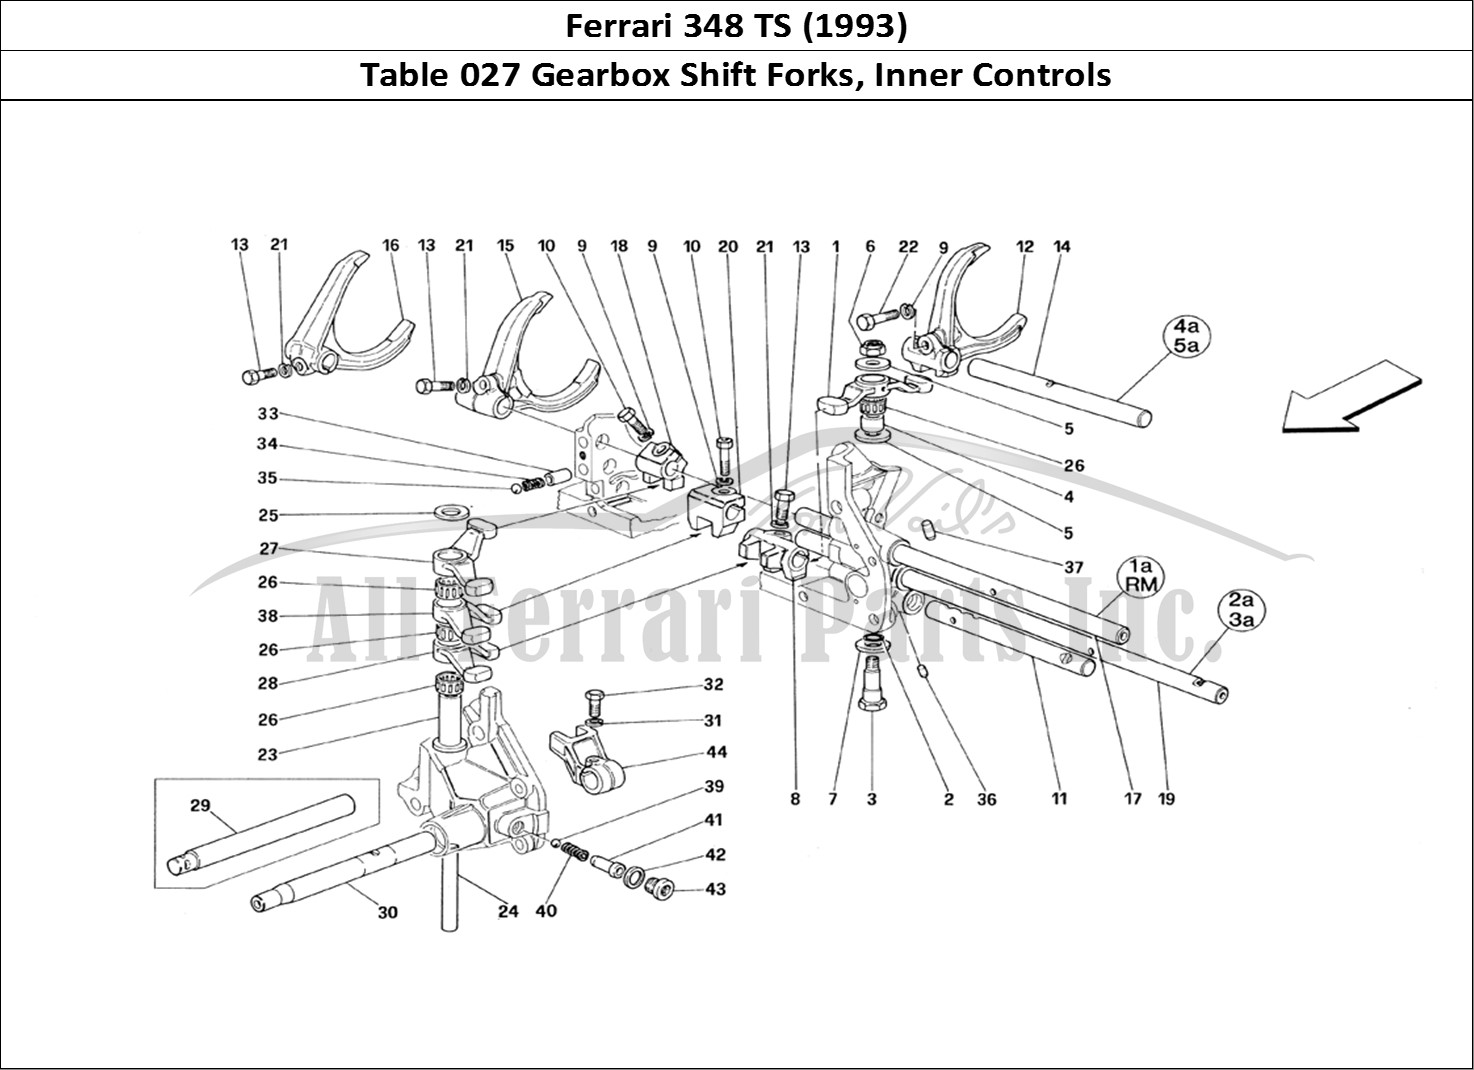 Ferrari Parts Ferrari 348 TB (1993) Page 027 Inside Gearbox Controls